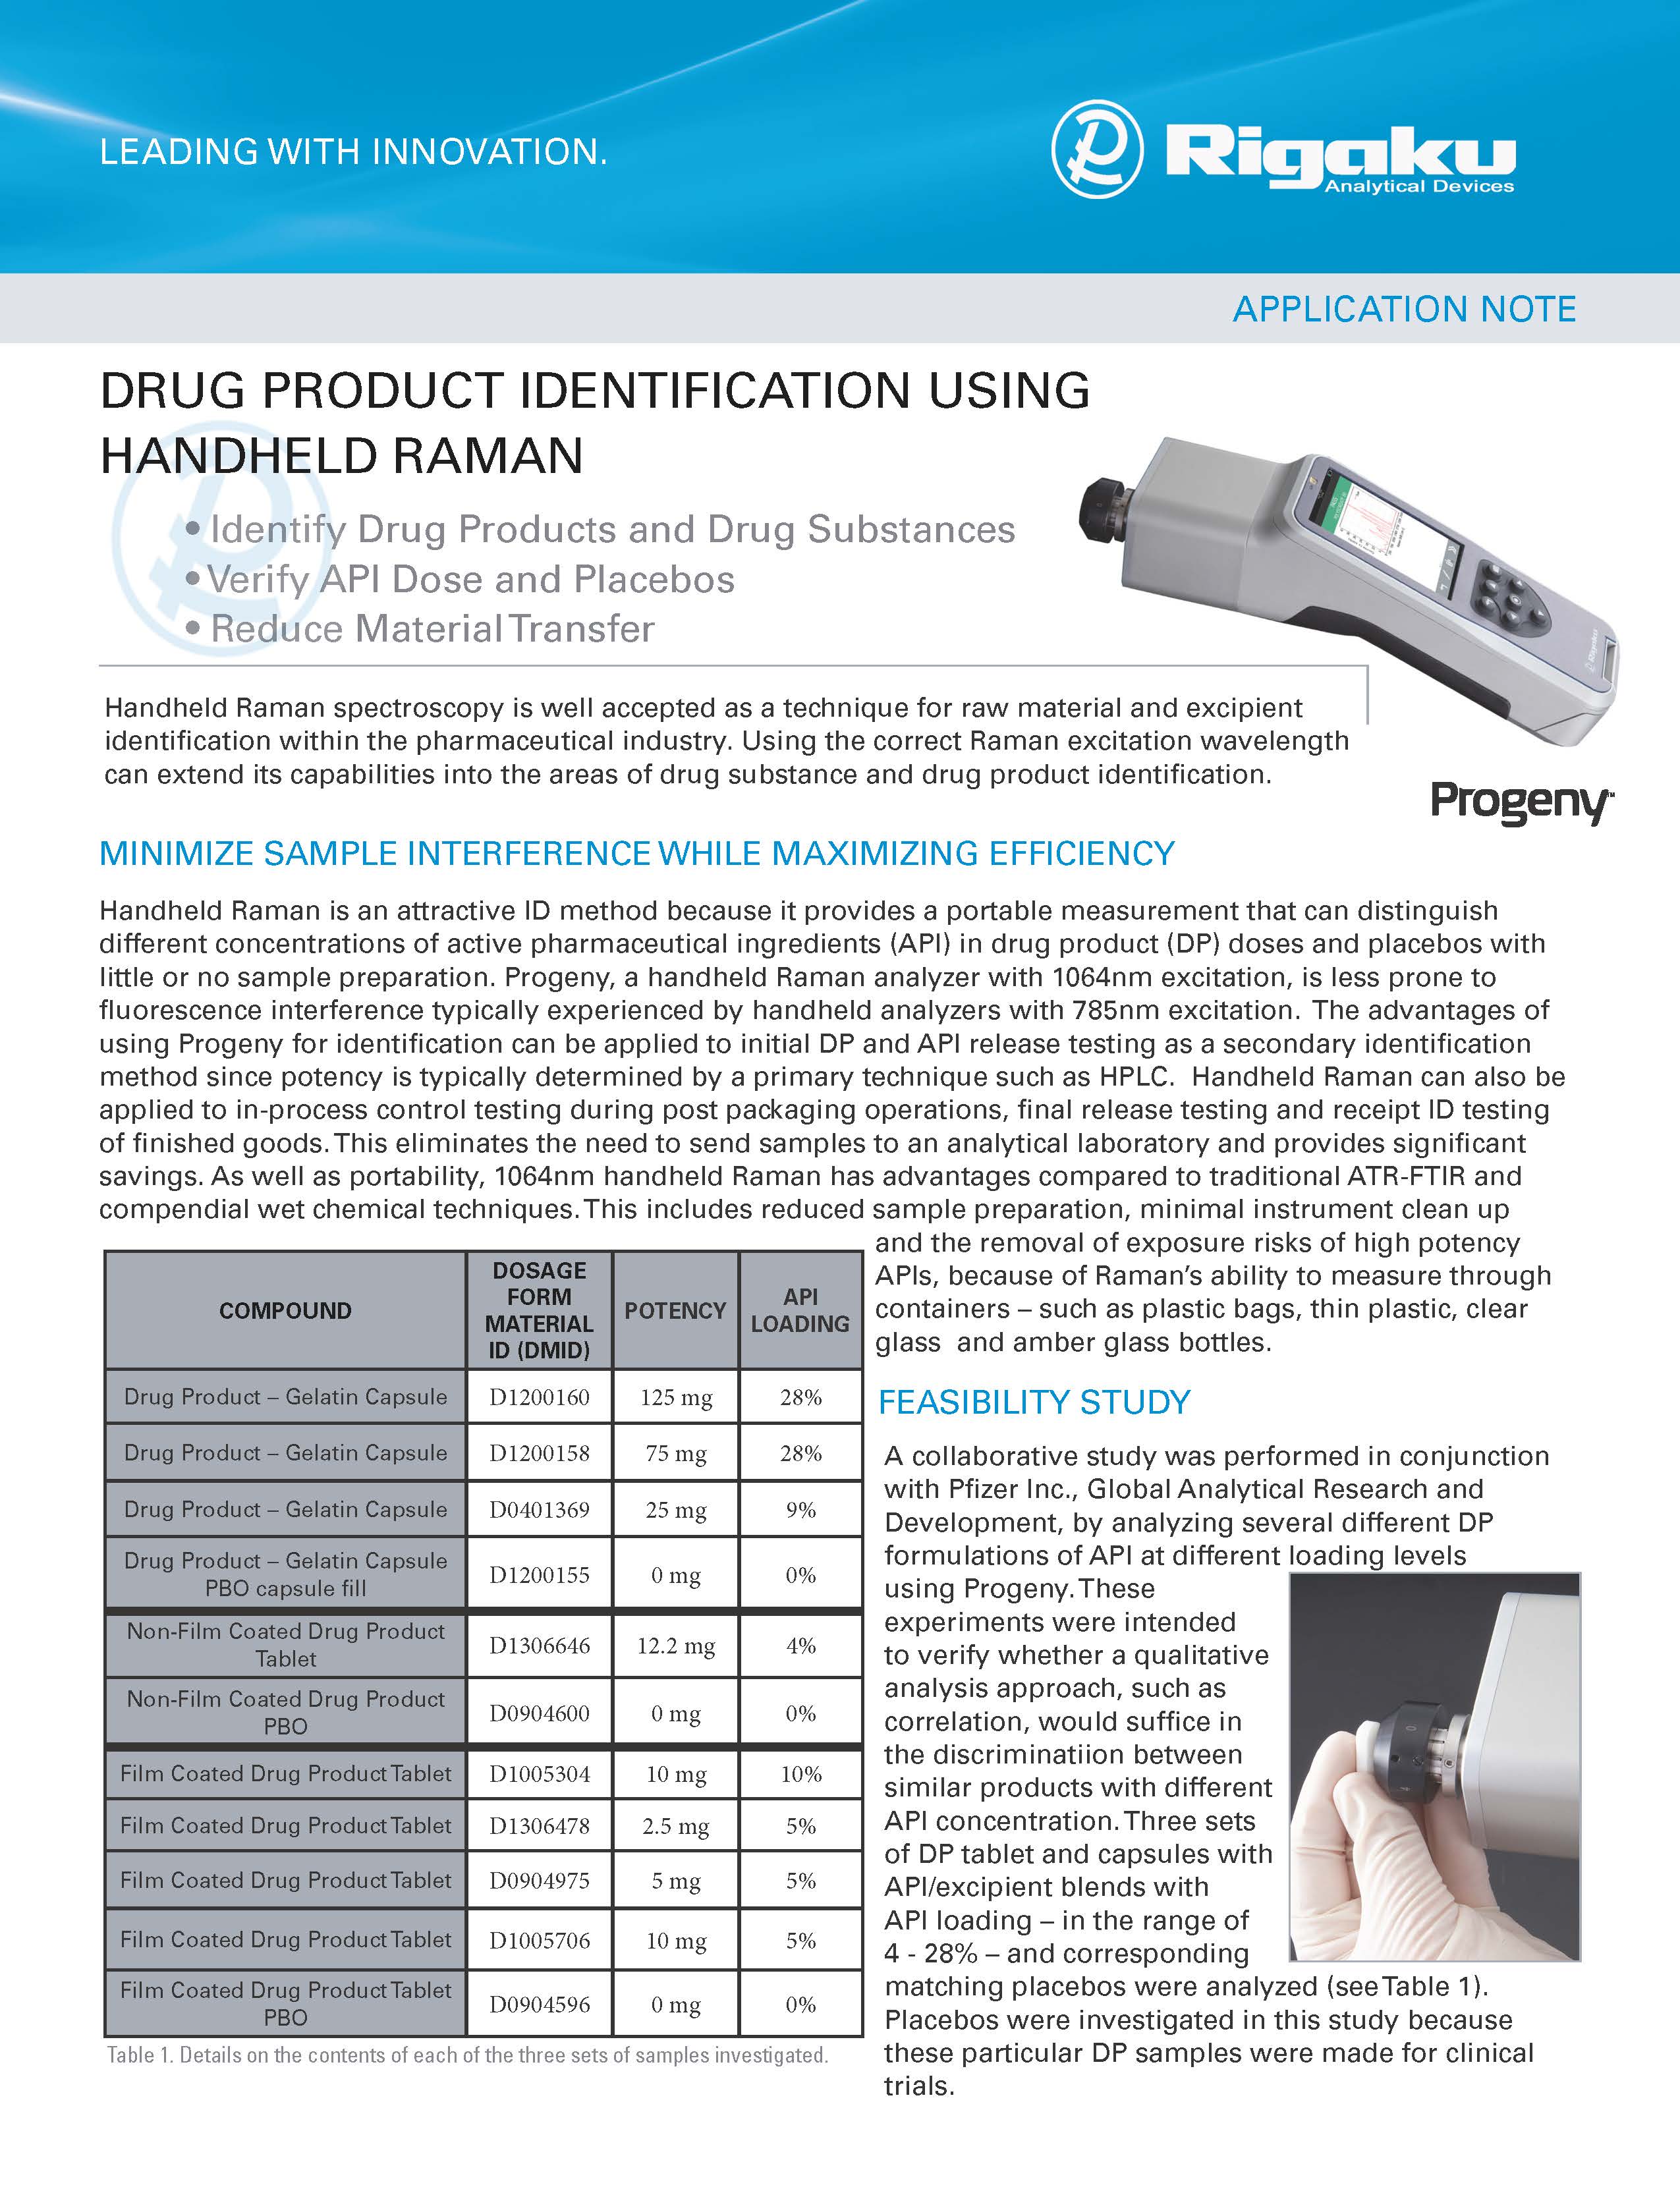 Drug ID App Note 2017June29_Page_1